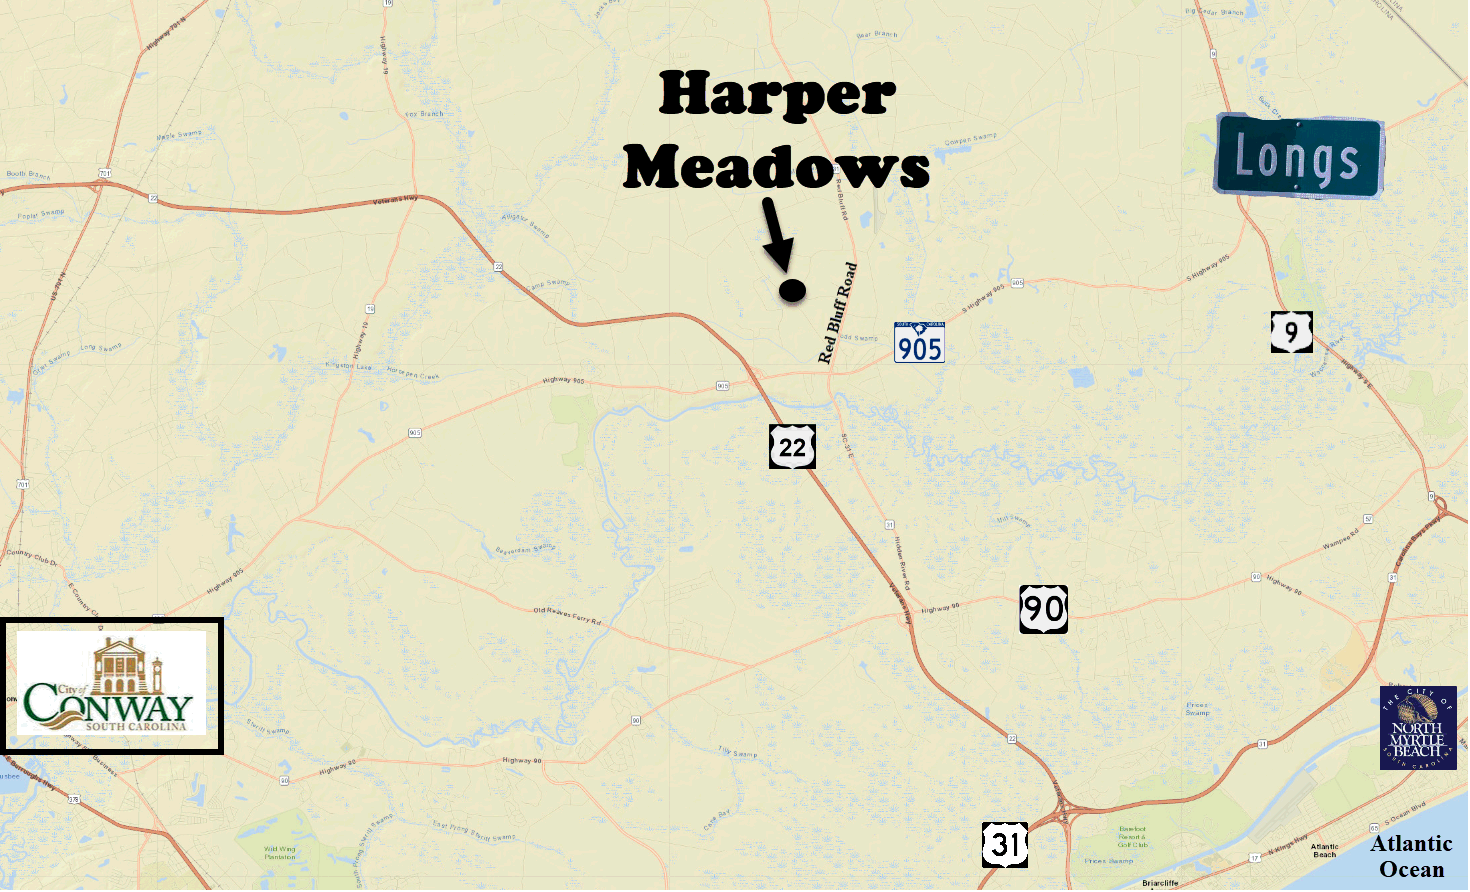 New home community of Harper Meadows in Longs by D. R. Horton